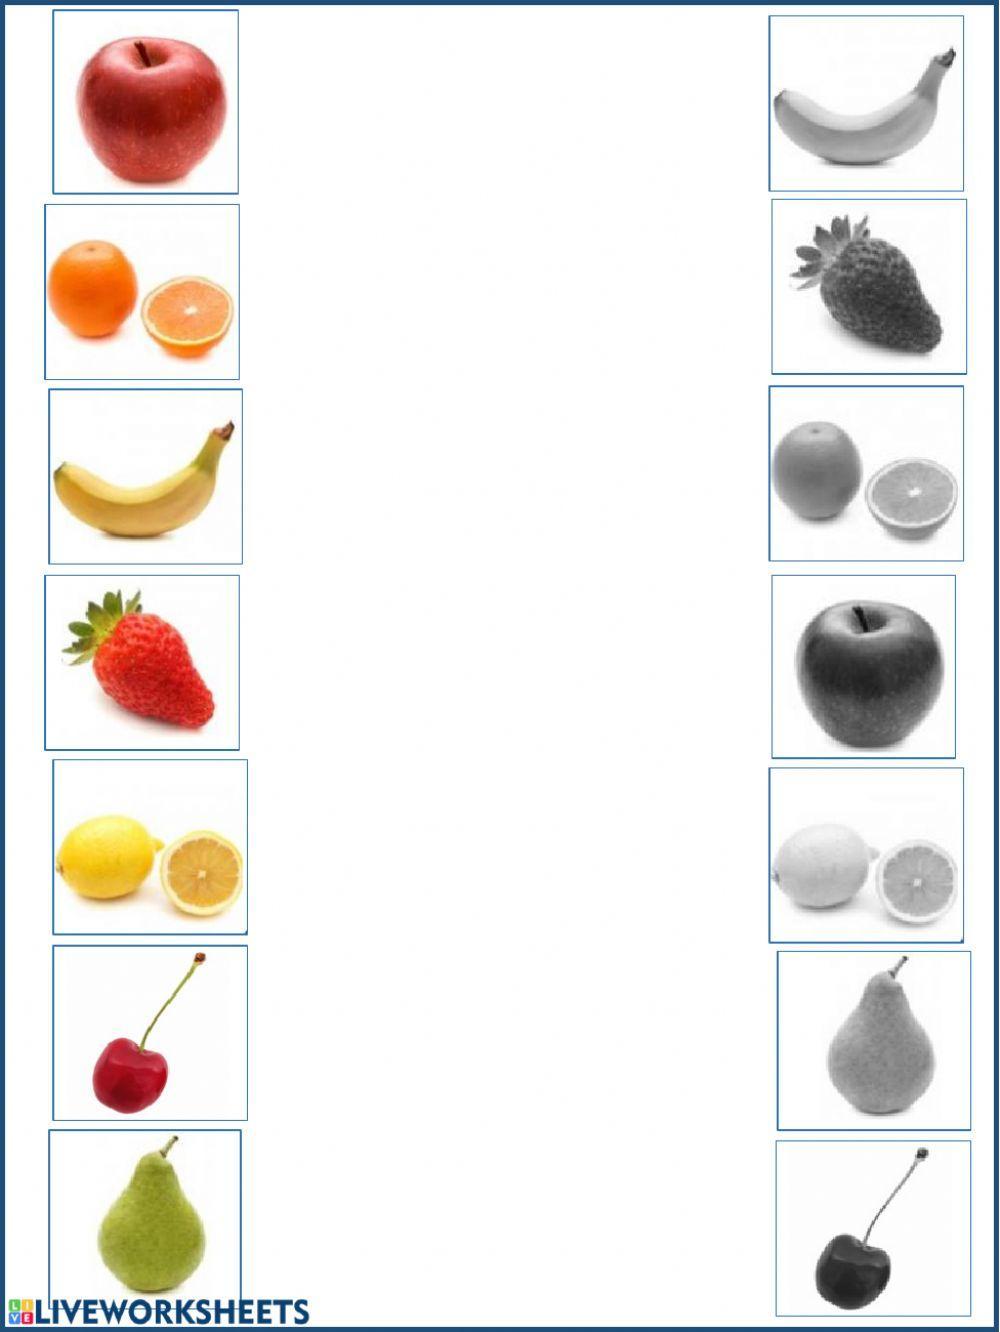 Alimentos (fruta)